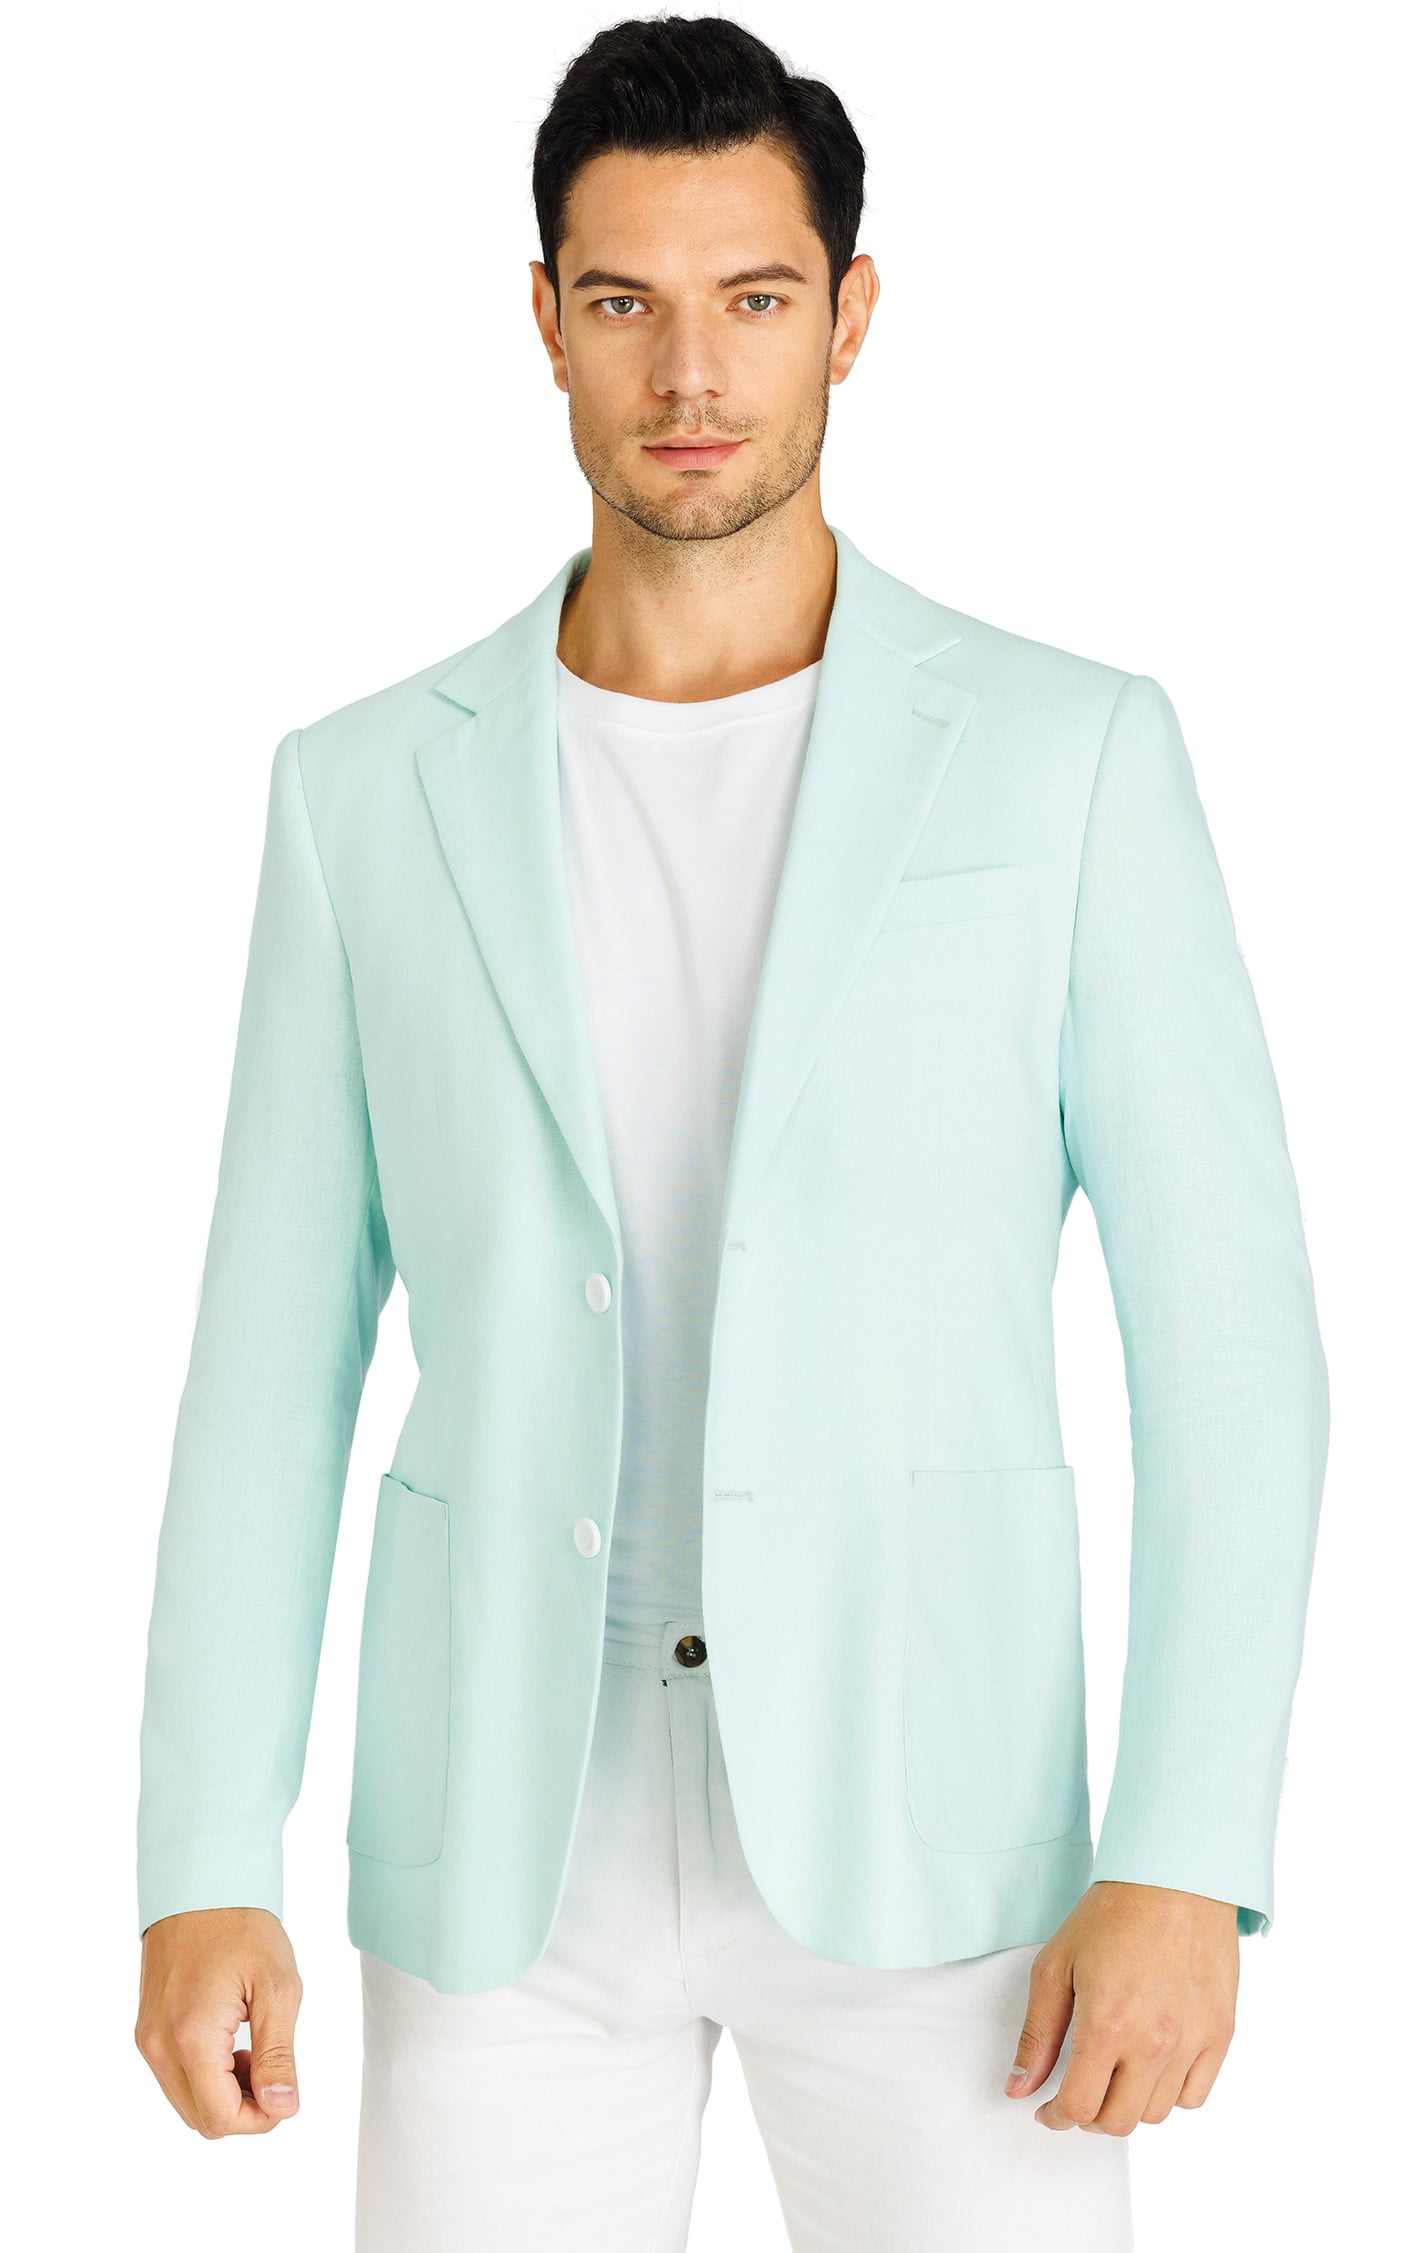 Elina fashion Men's Plaid Checked Blazer 2 Button Long Sleeve Regular Fit Suit Jacket Business Lightweight Casual Sport Coat 